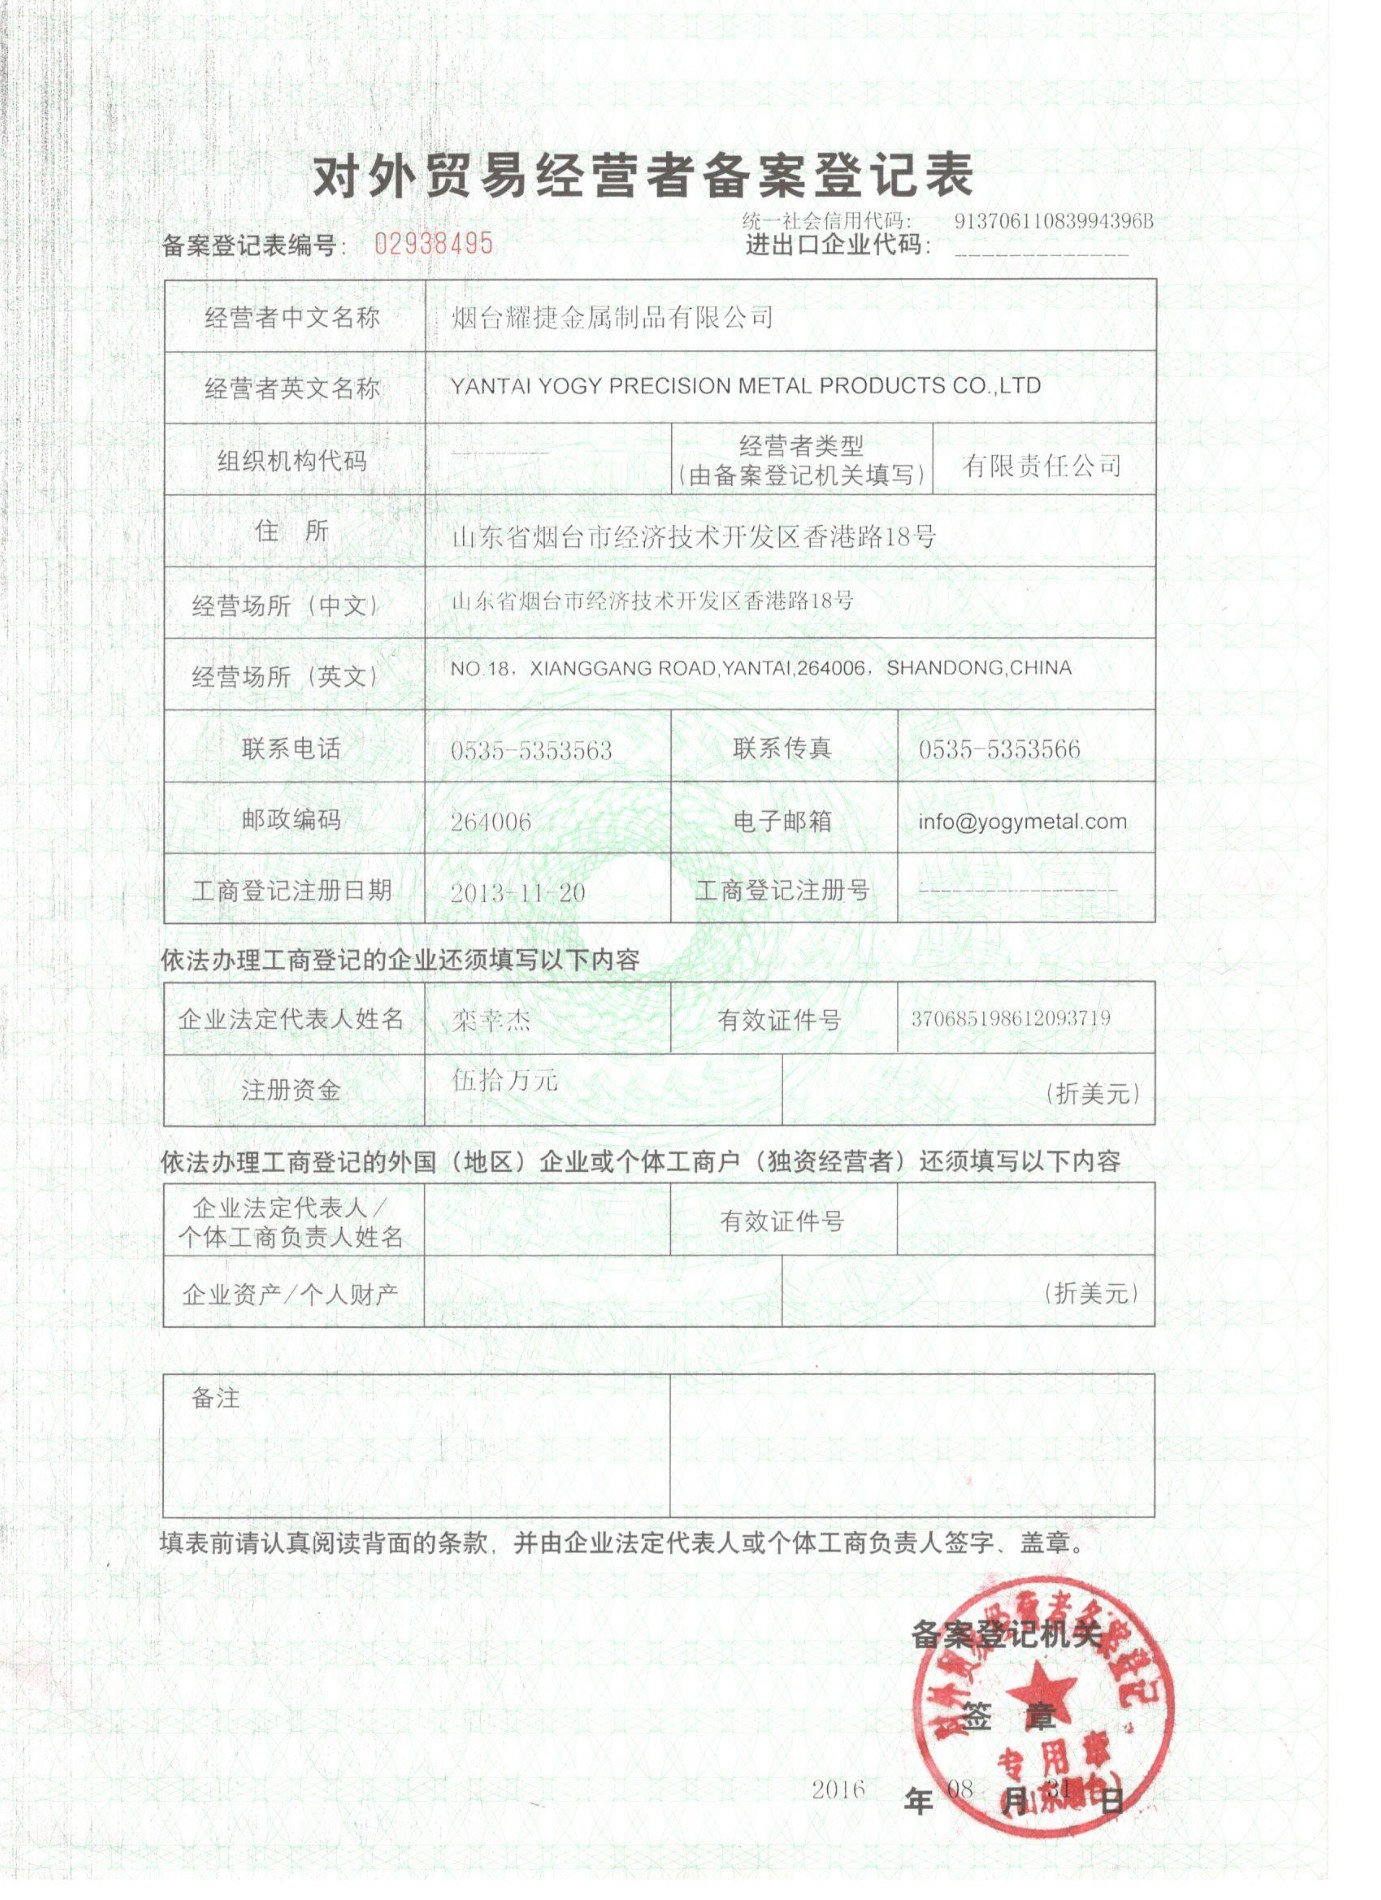 Foreign trade operator registration form